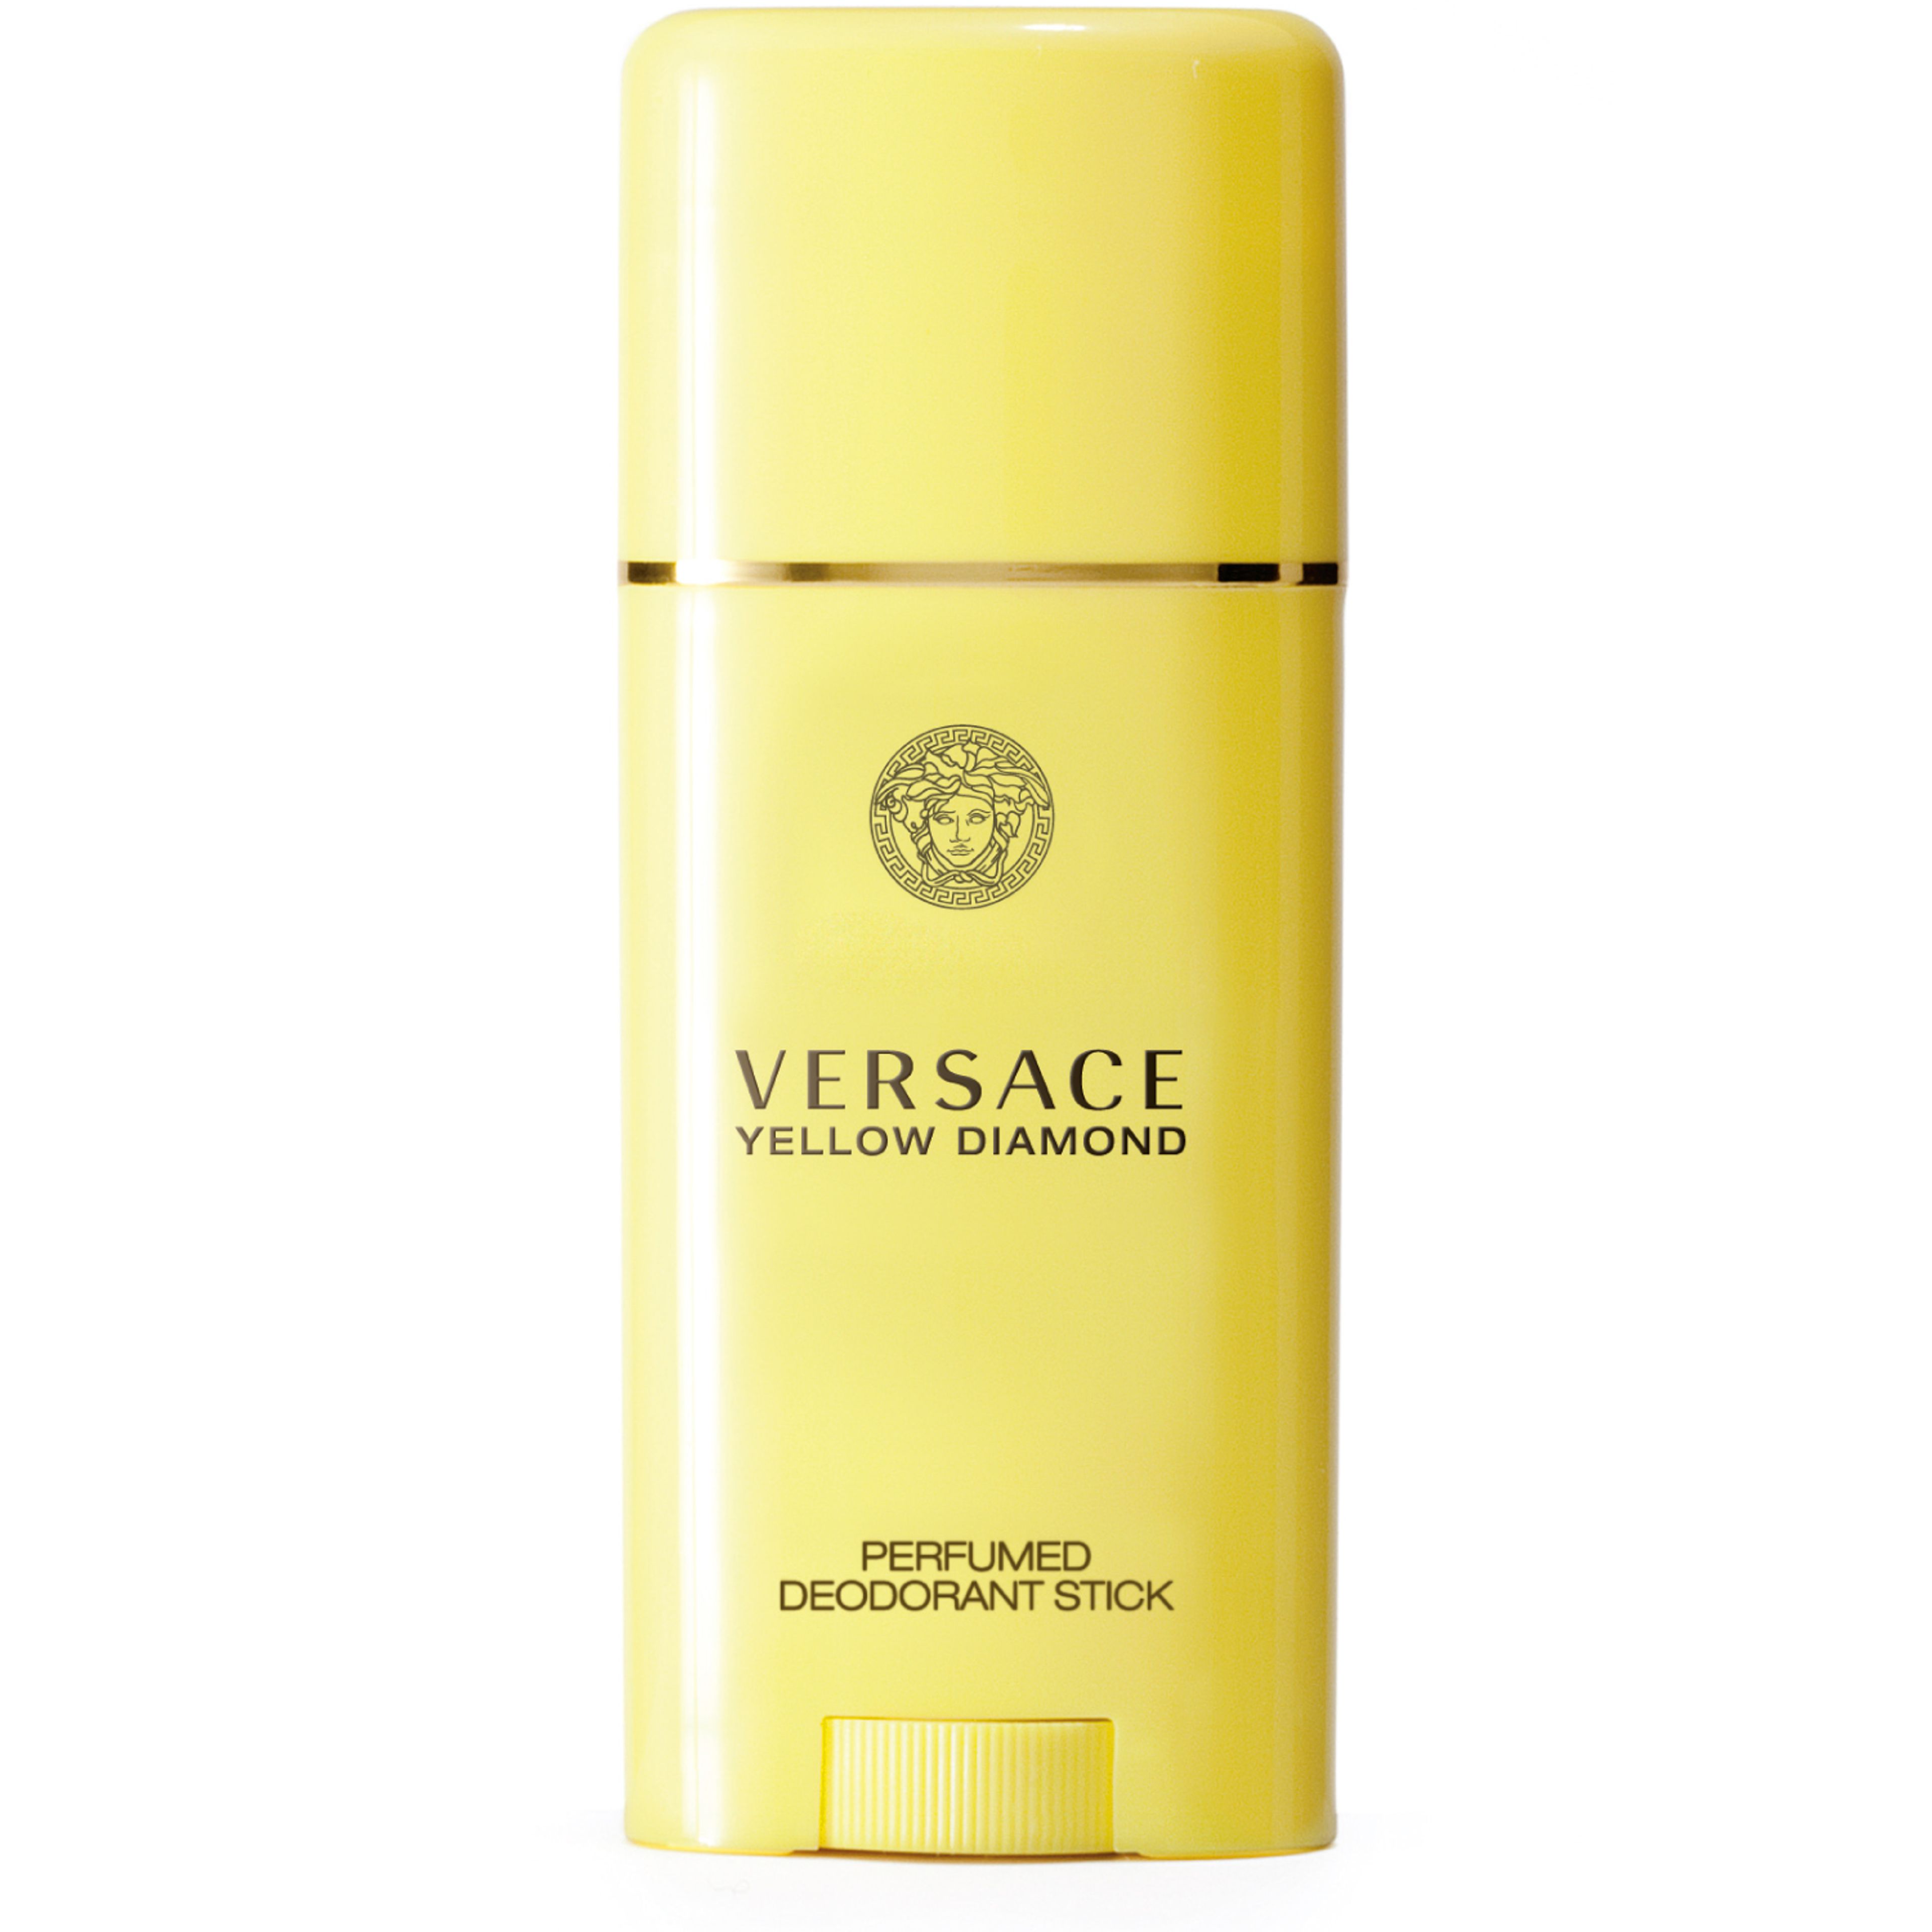 Versace Yellow Diamond Deodorant Stick 1